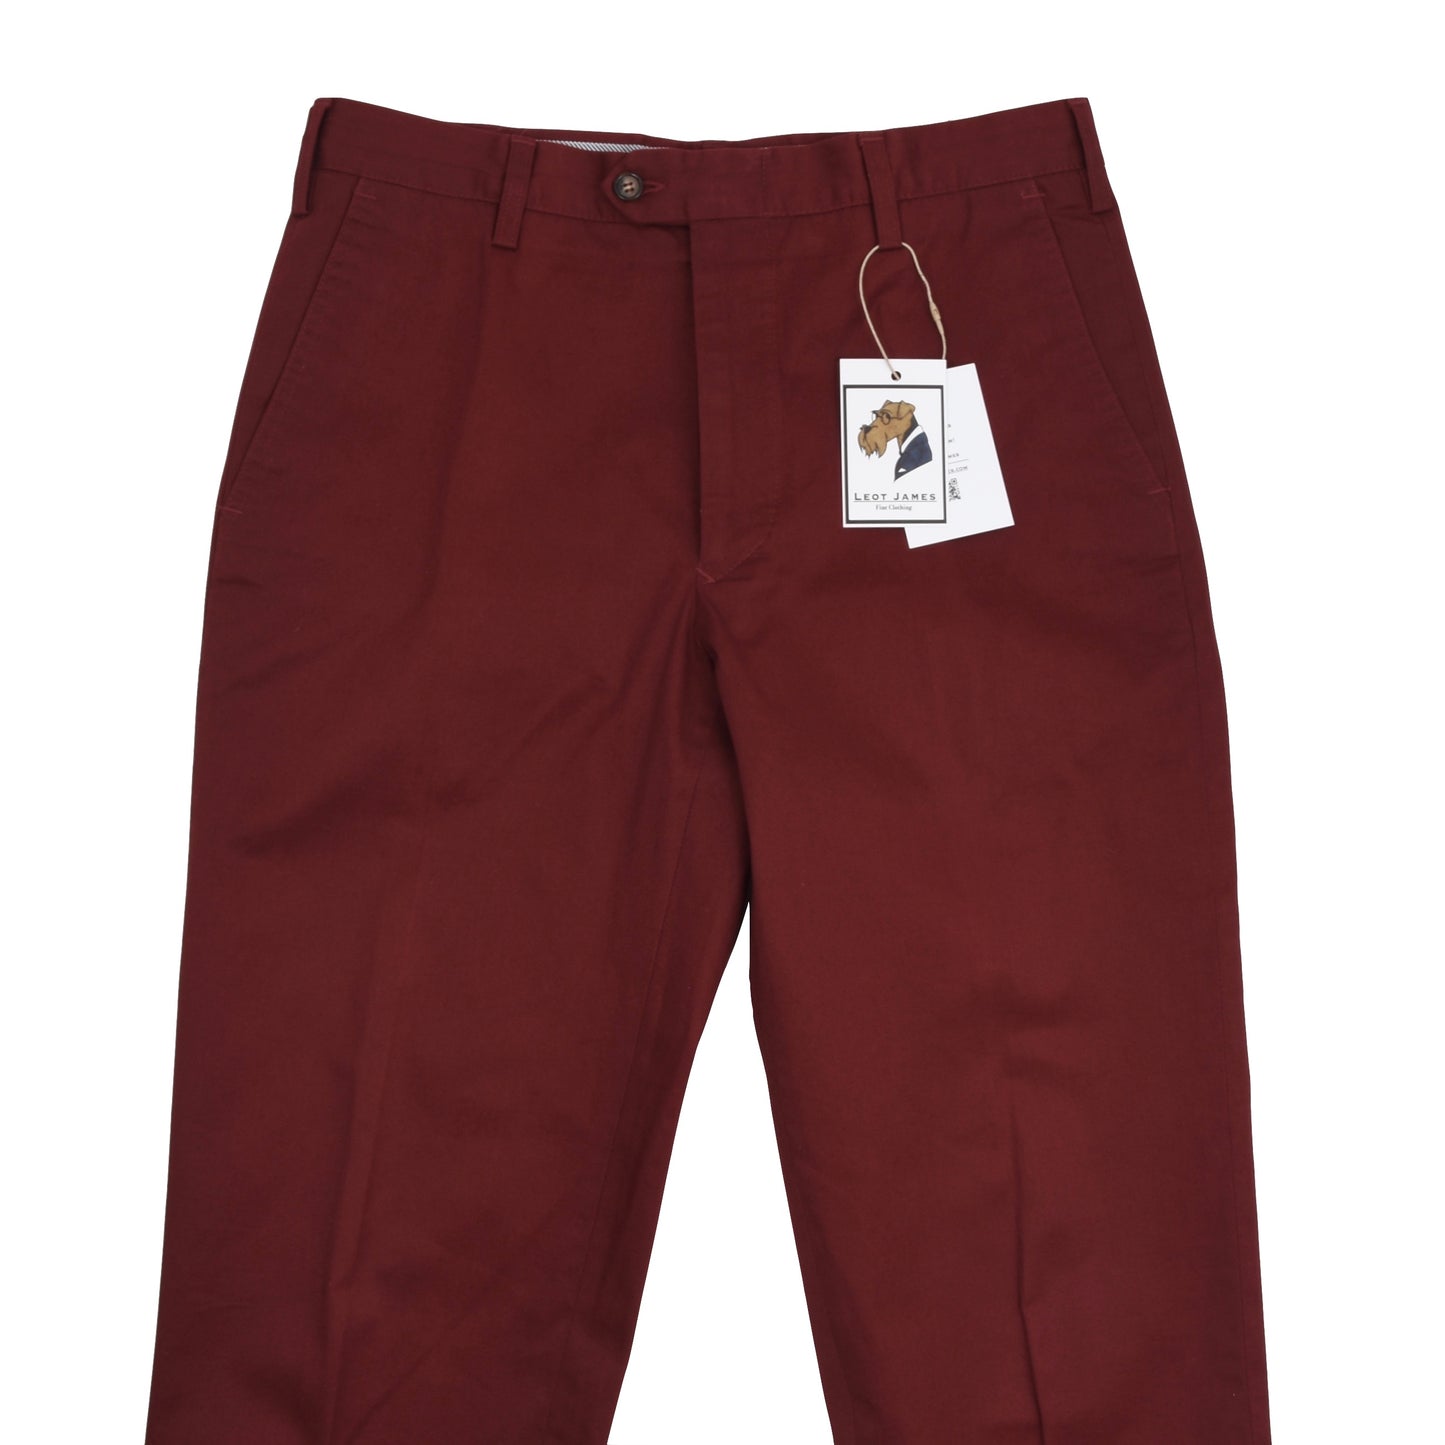 Rota Sport Cotton Pants Size 48 - Burgundy